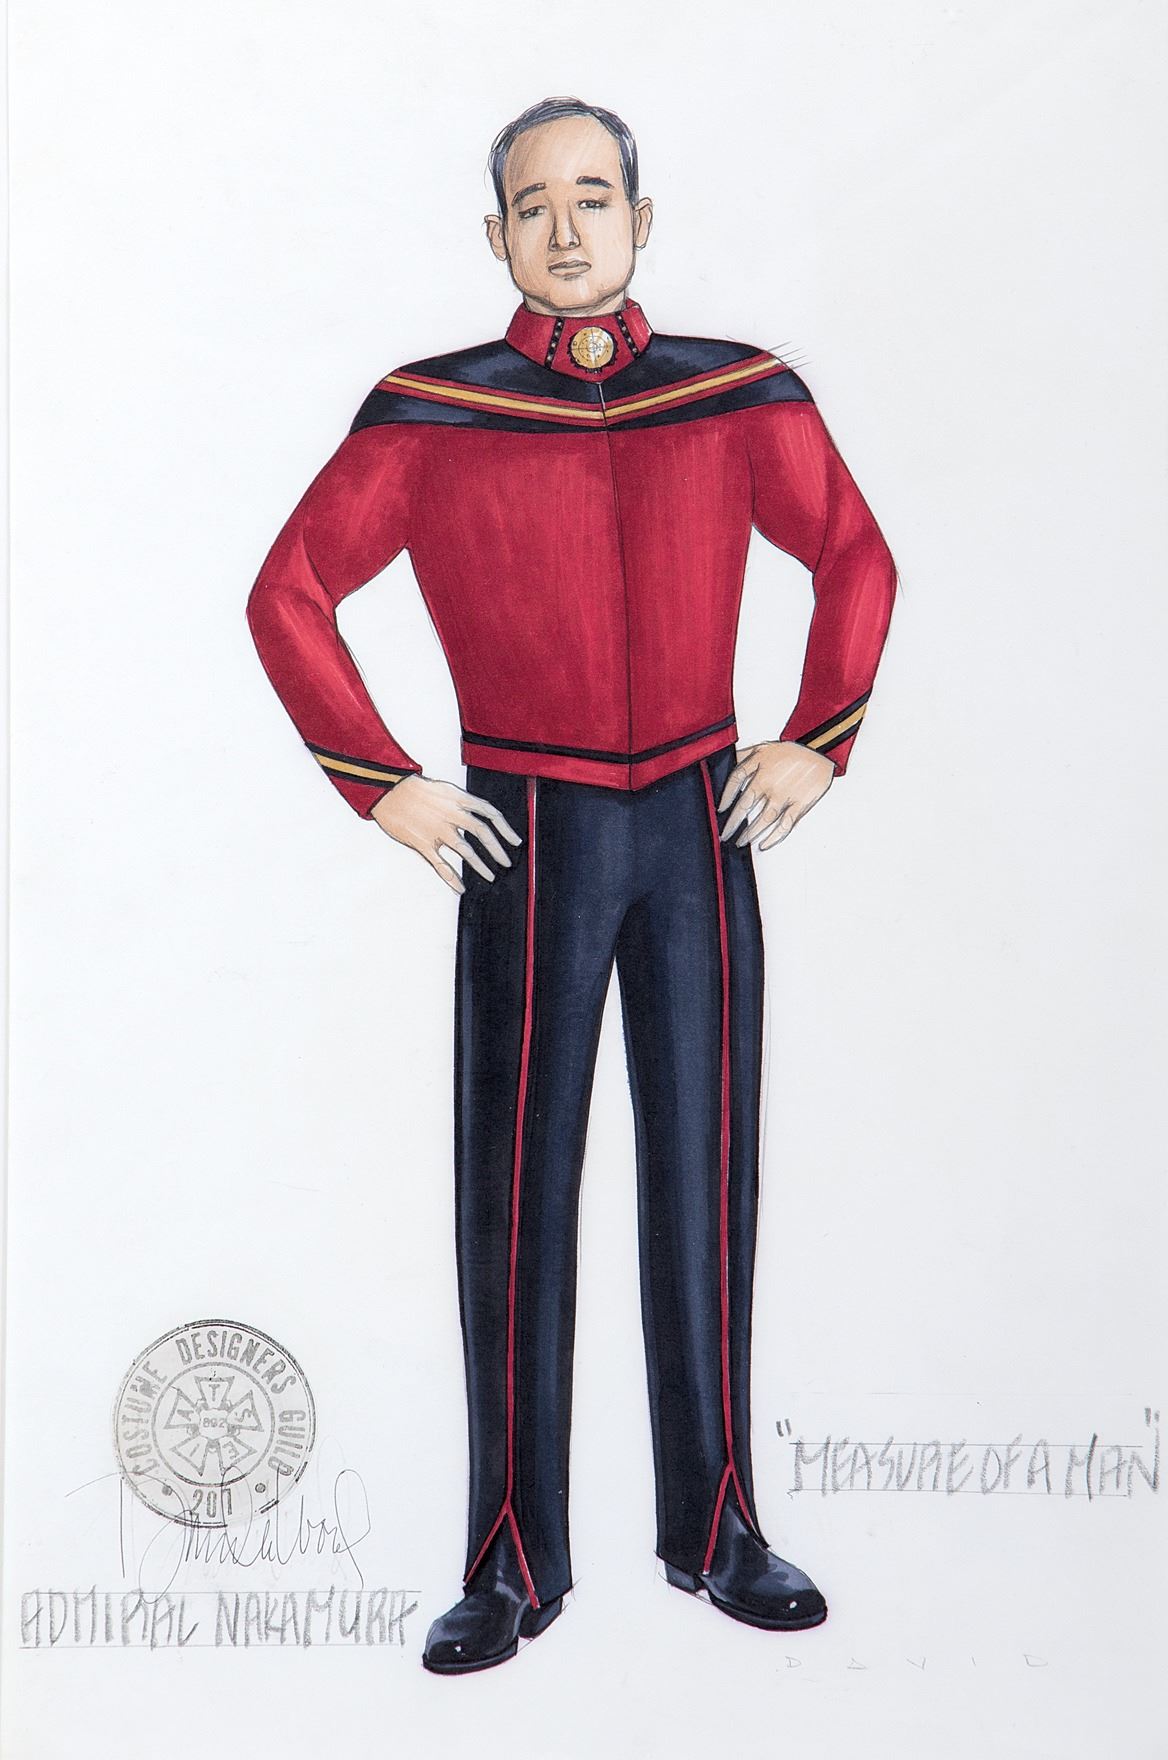 TNG admiral uniform (season 2) examination - Star Trek Costume Guide